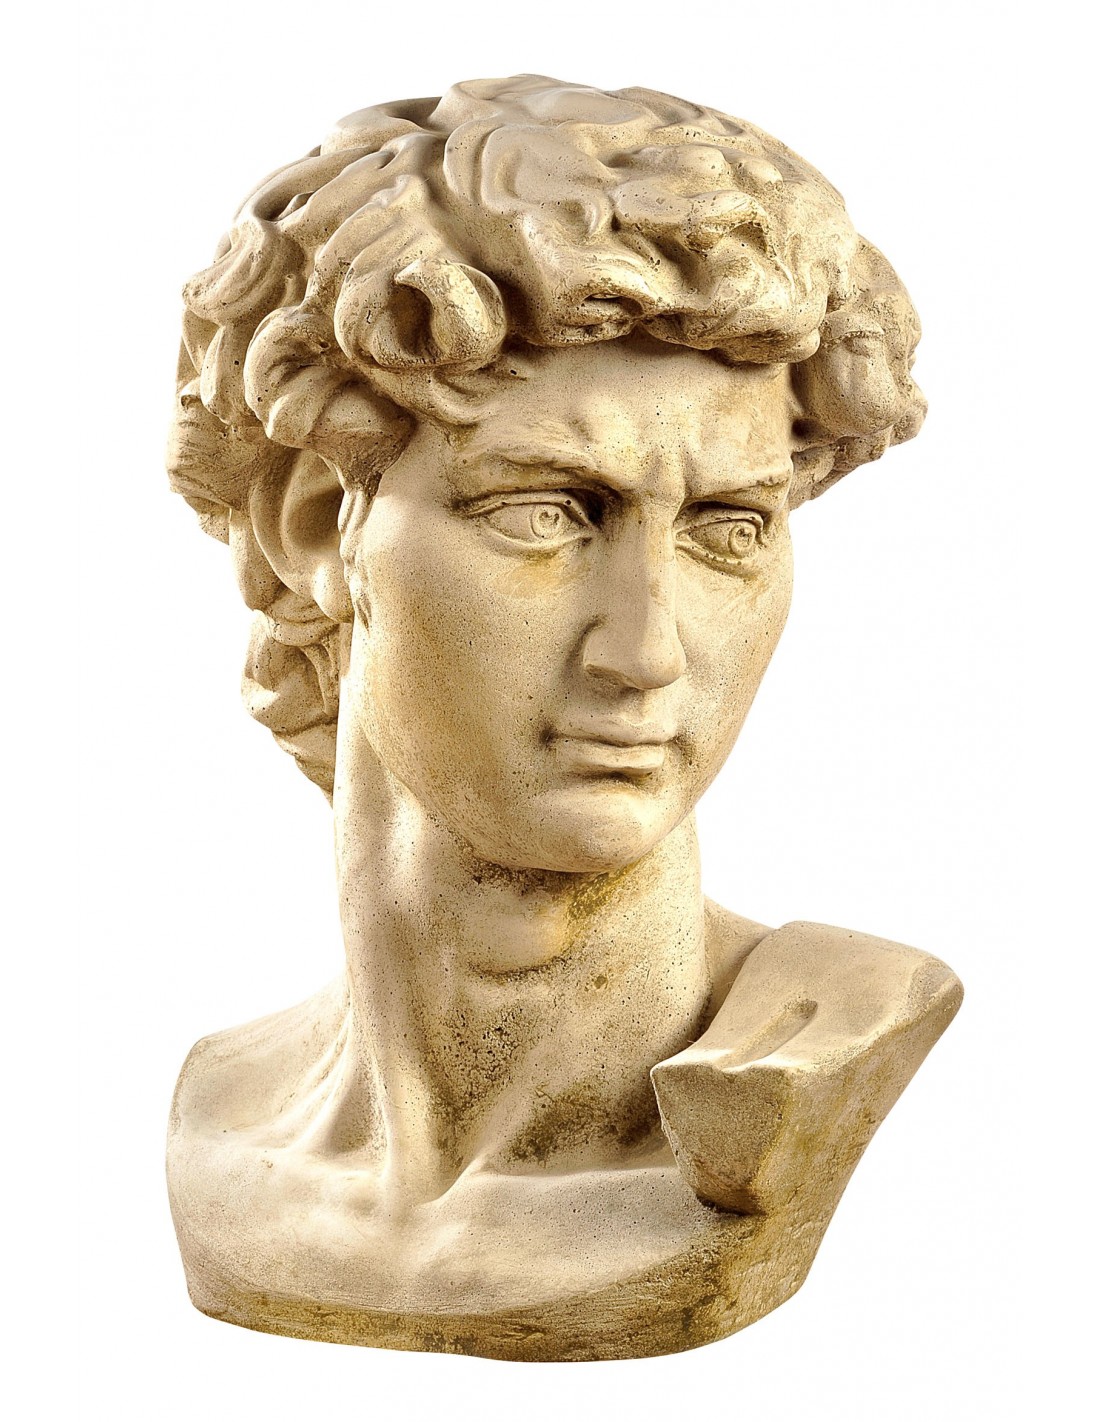 Bust of David by Michelangelo. 45x60cm - Sale of art statues